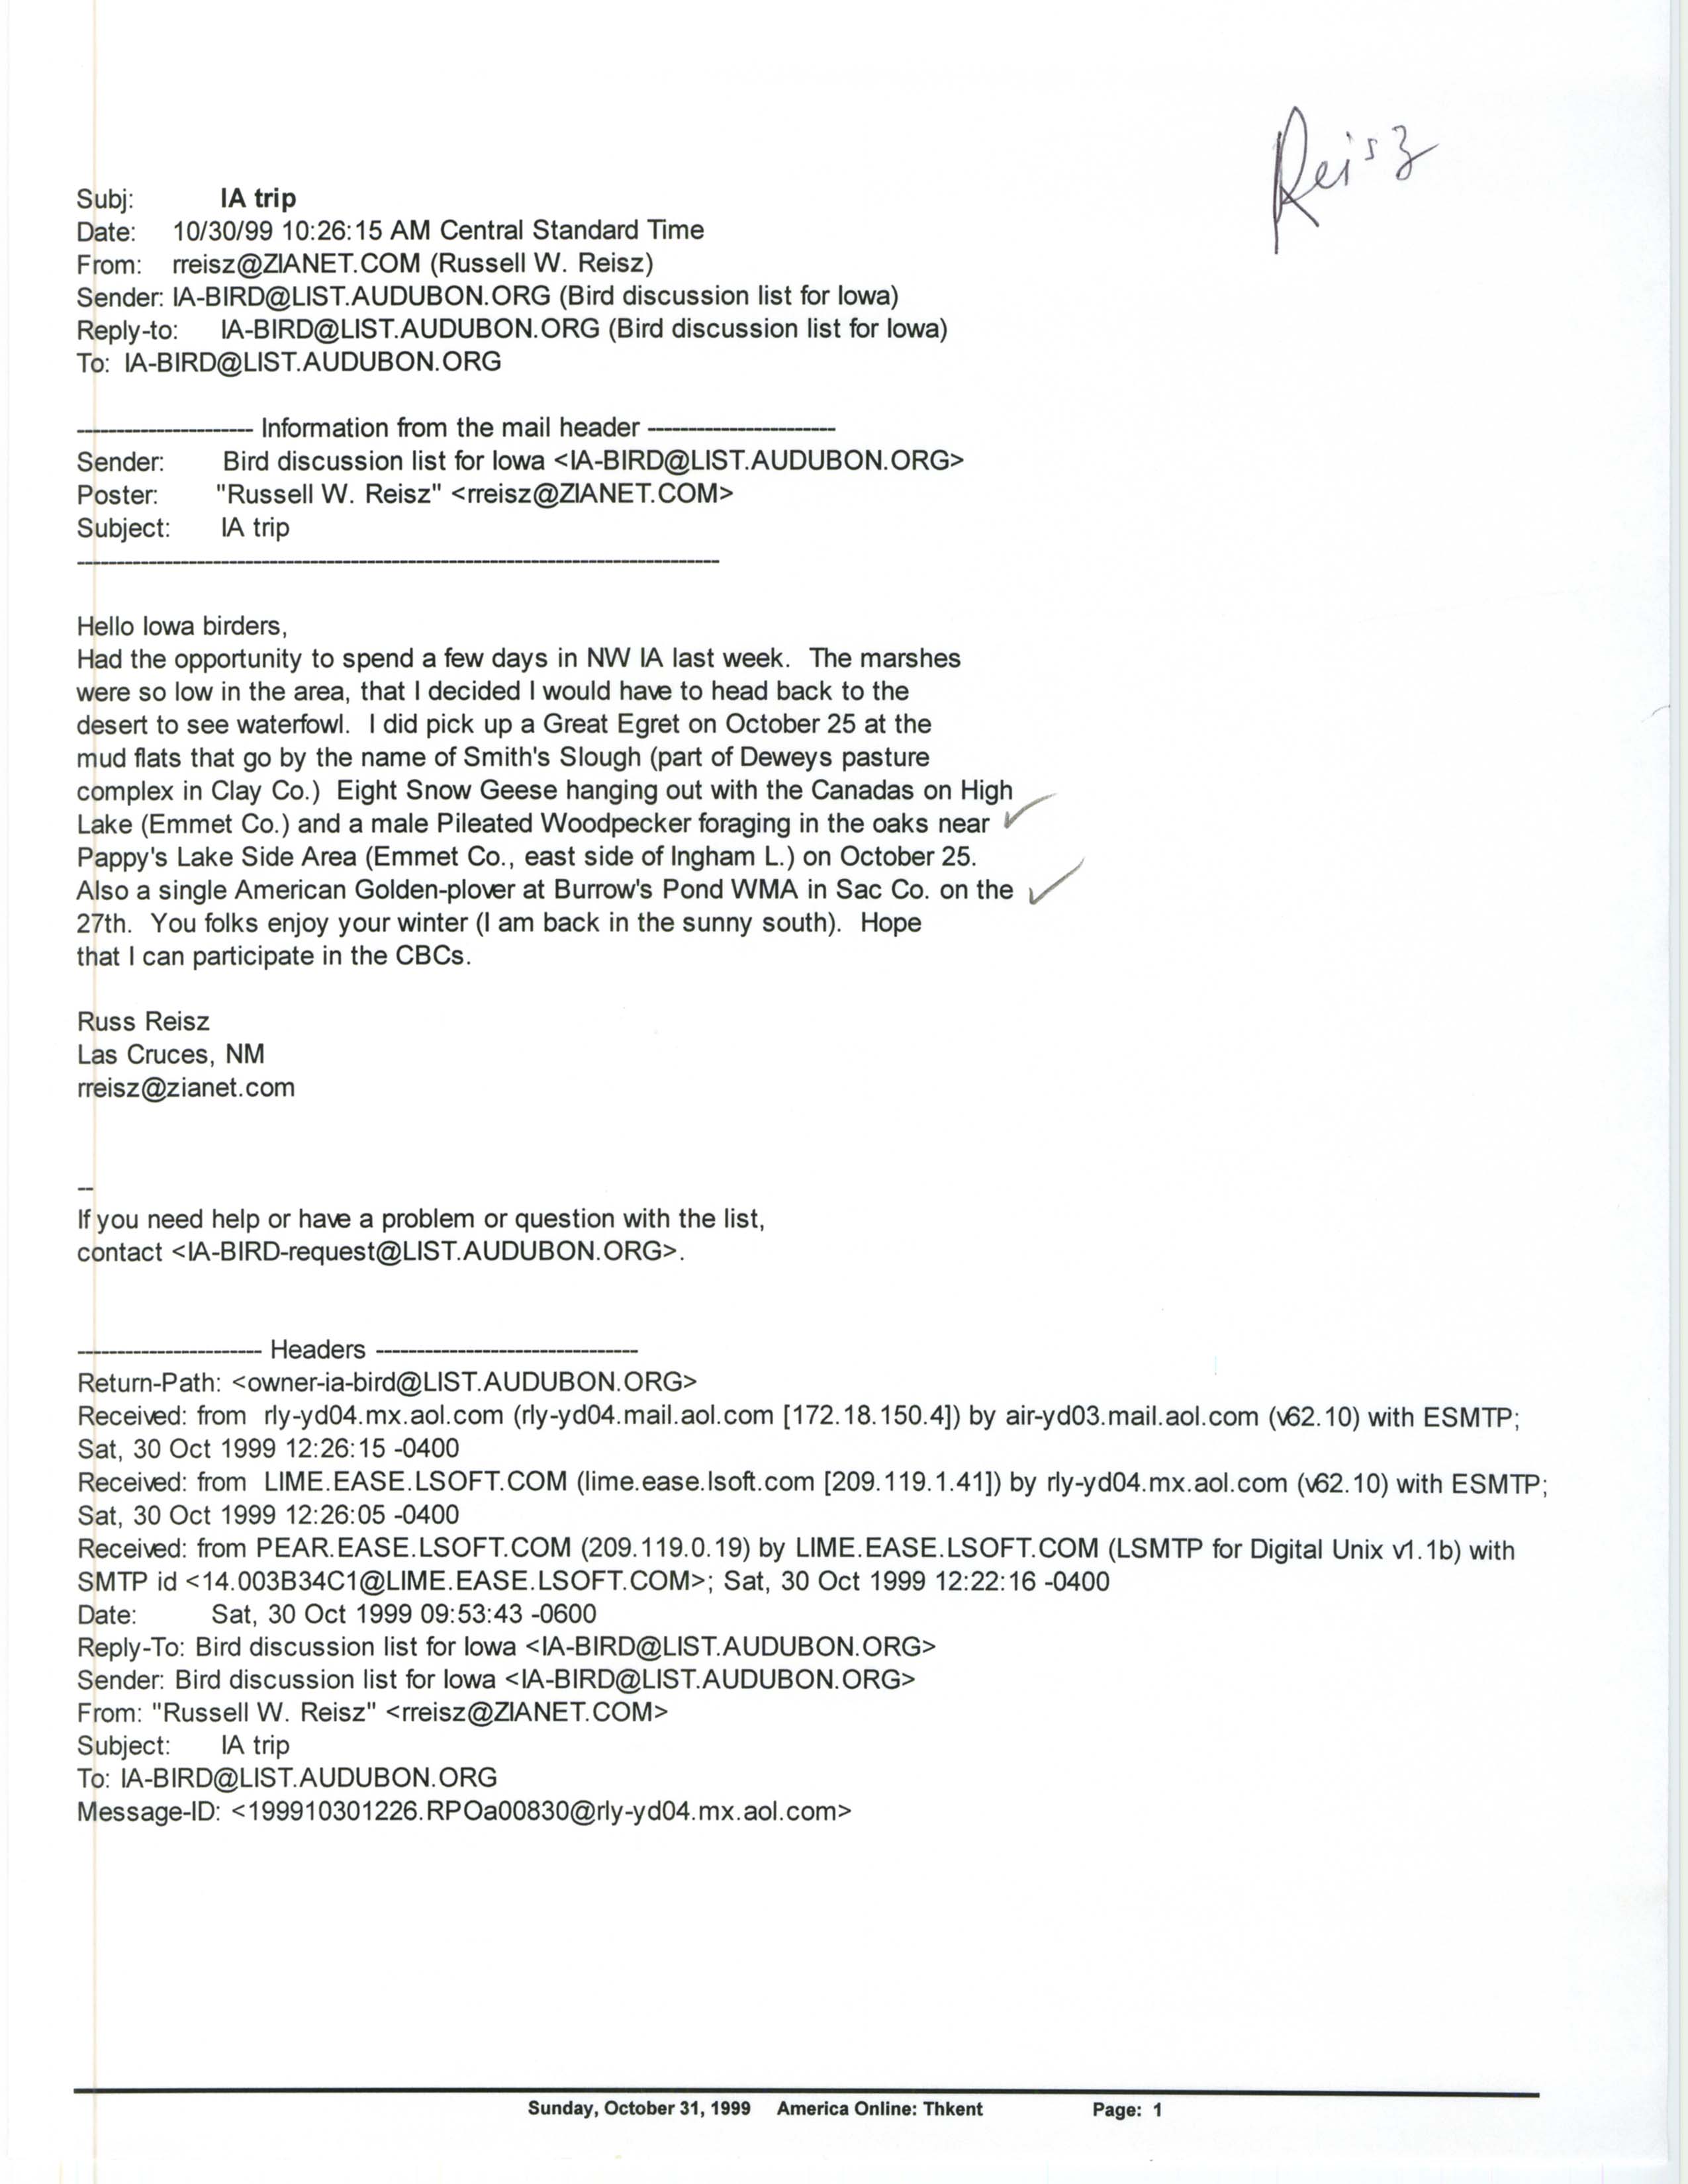 Russell Reisz email to the Iowa Bird listserv regarding Iowa sightings, October 30, 1999